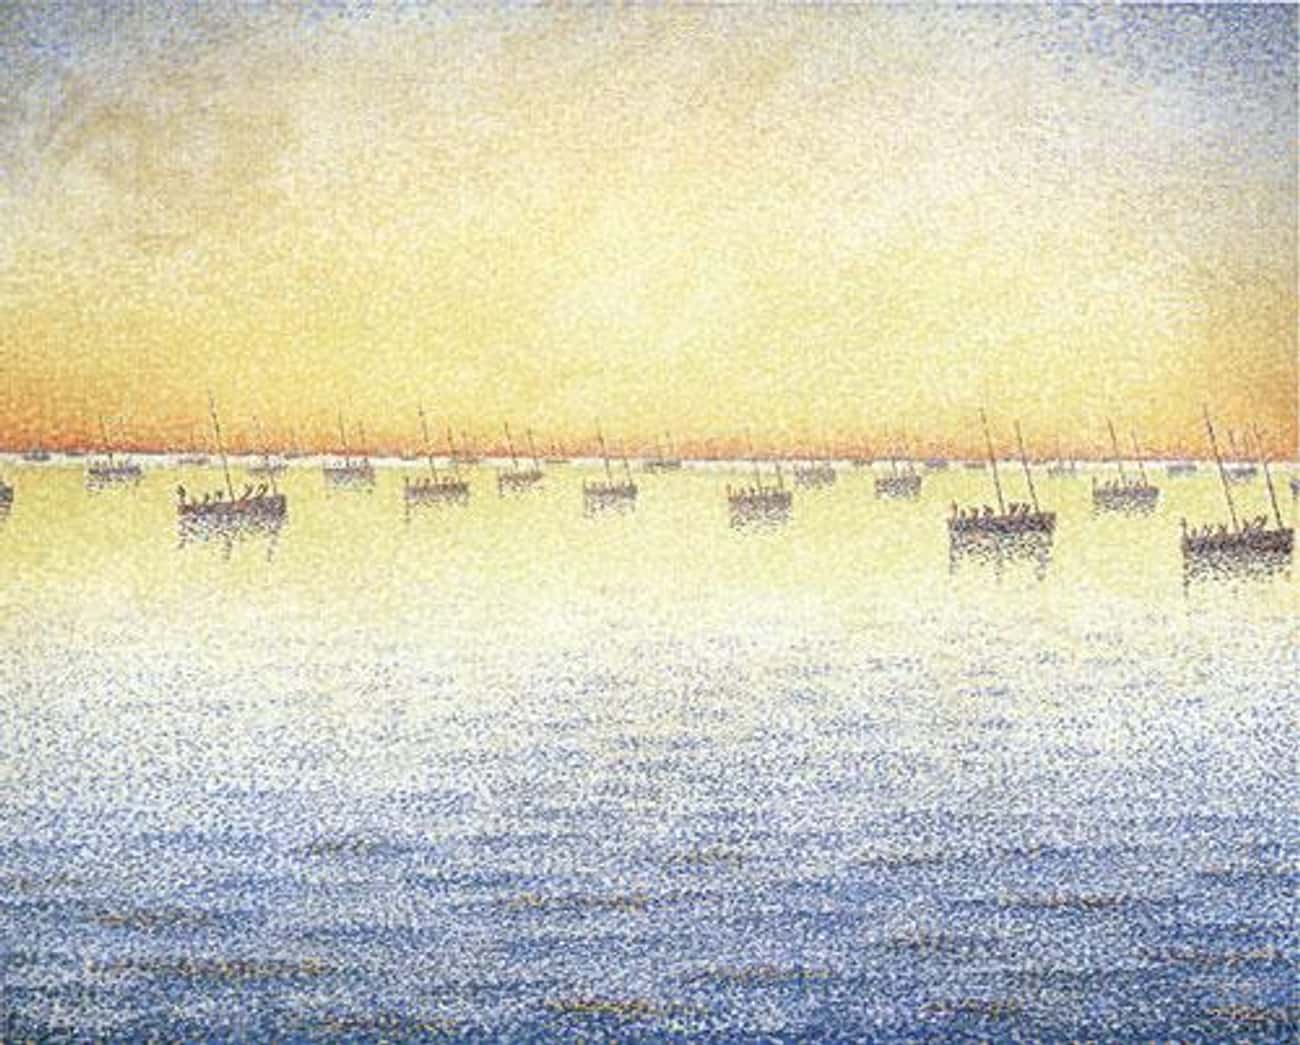 Setting Sun. Sardine Fishing. Adagio. Opus 221 from the series The Sea, The Boats, Concarneau